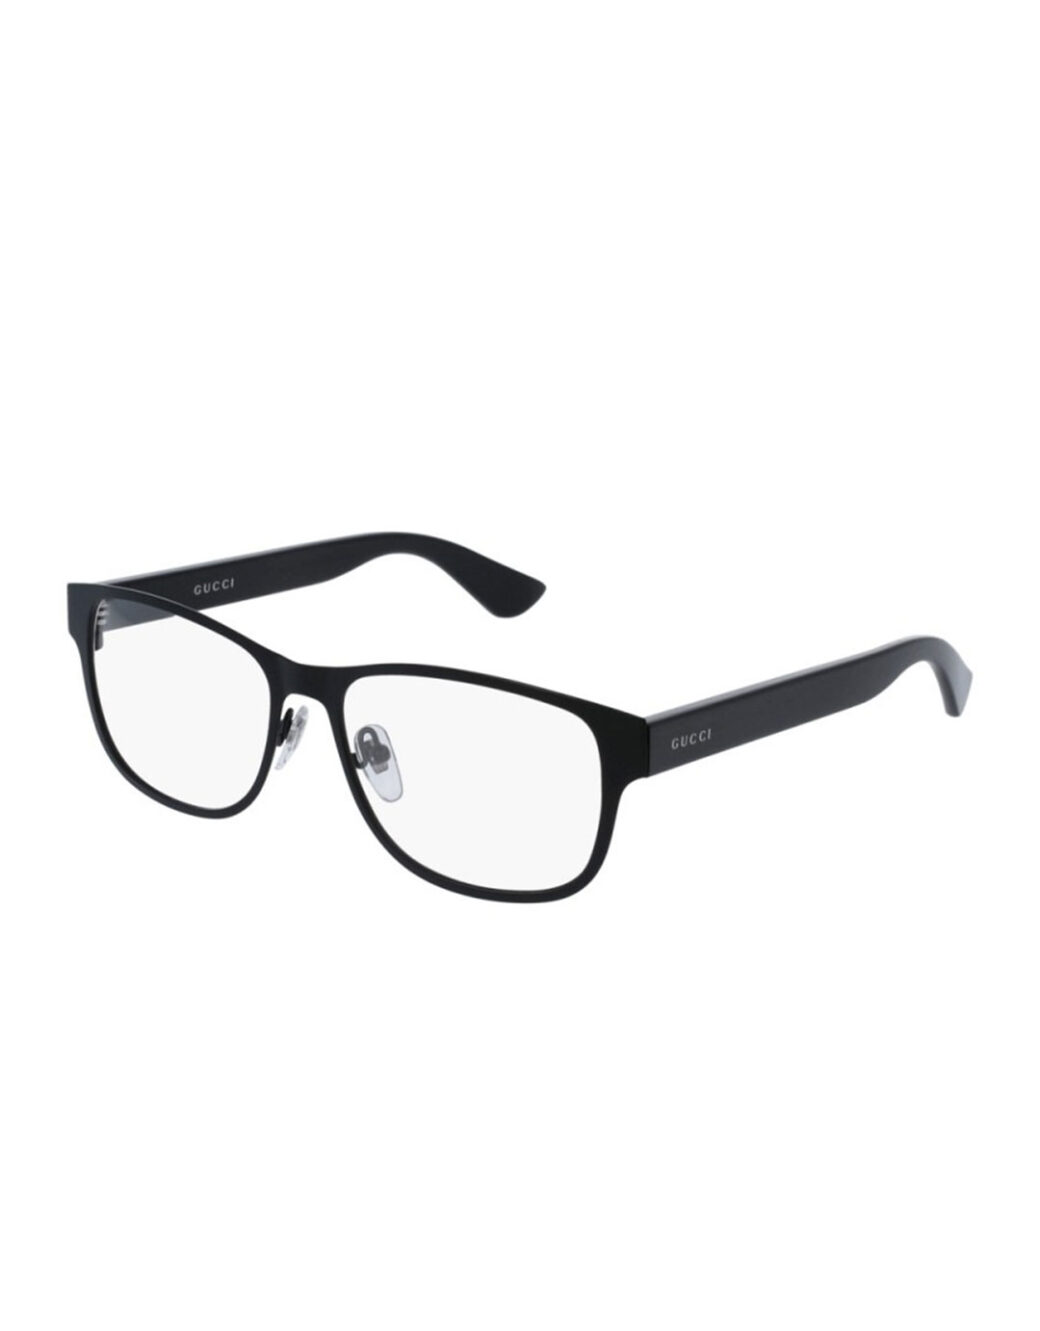 Gucci Eyewear - Shop Male Eyeglasses from UAE Optics